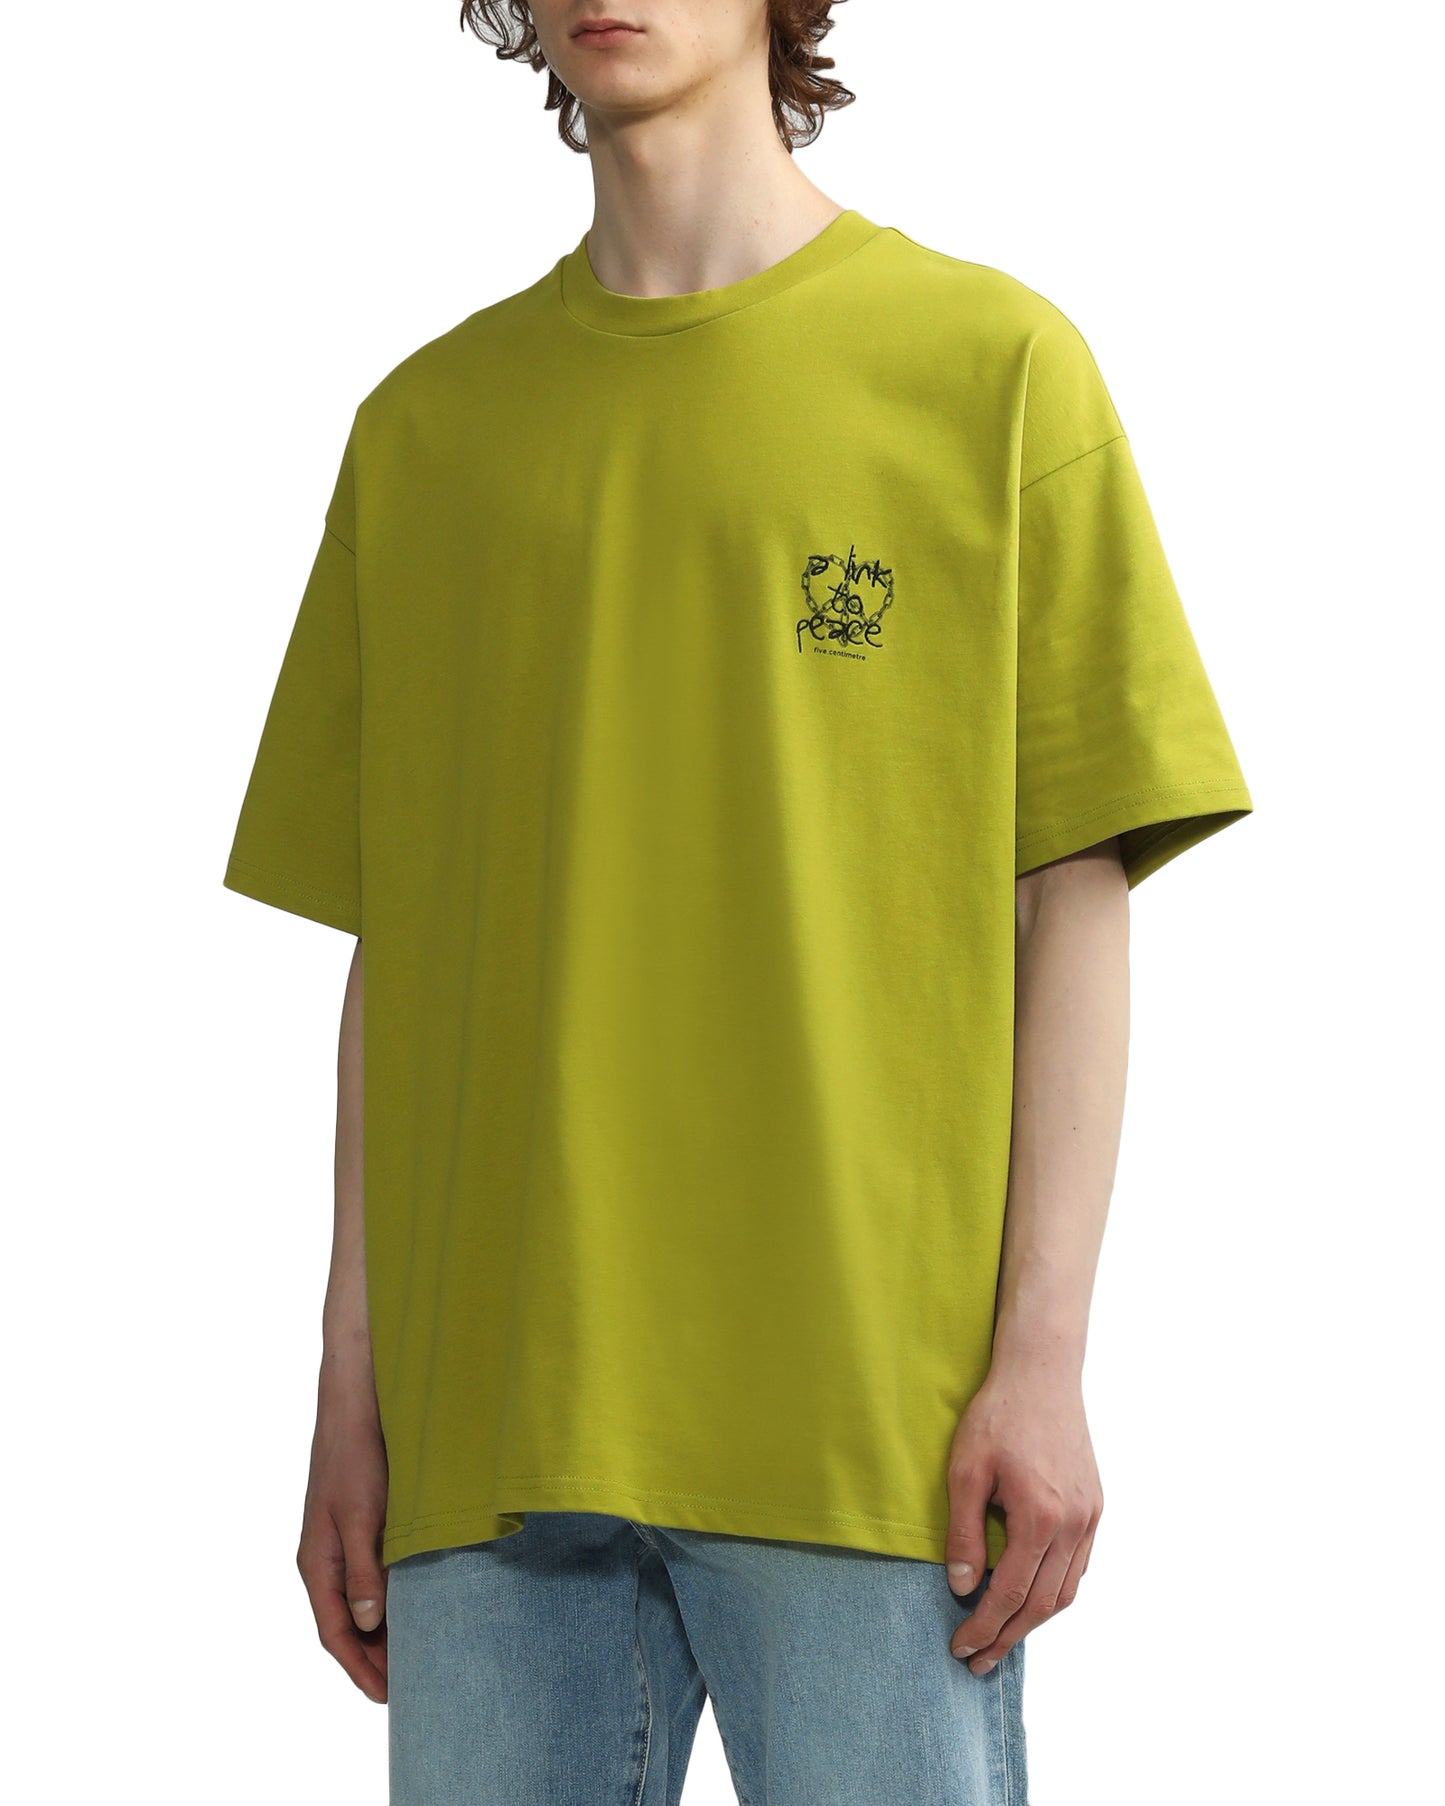 FIVE CM Men's Heart String T-shirt in Green/Yellow